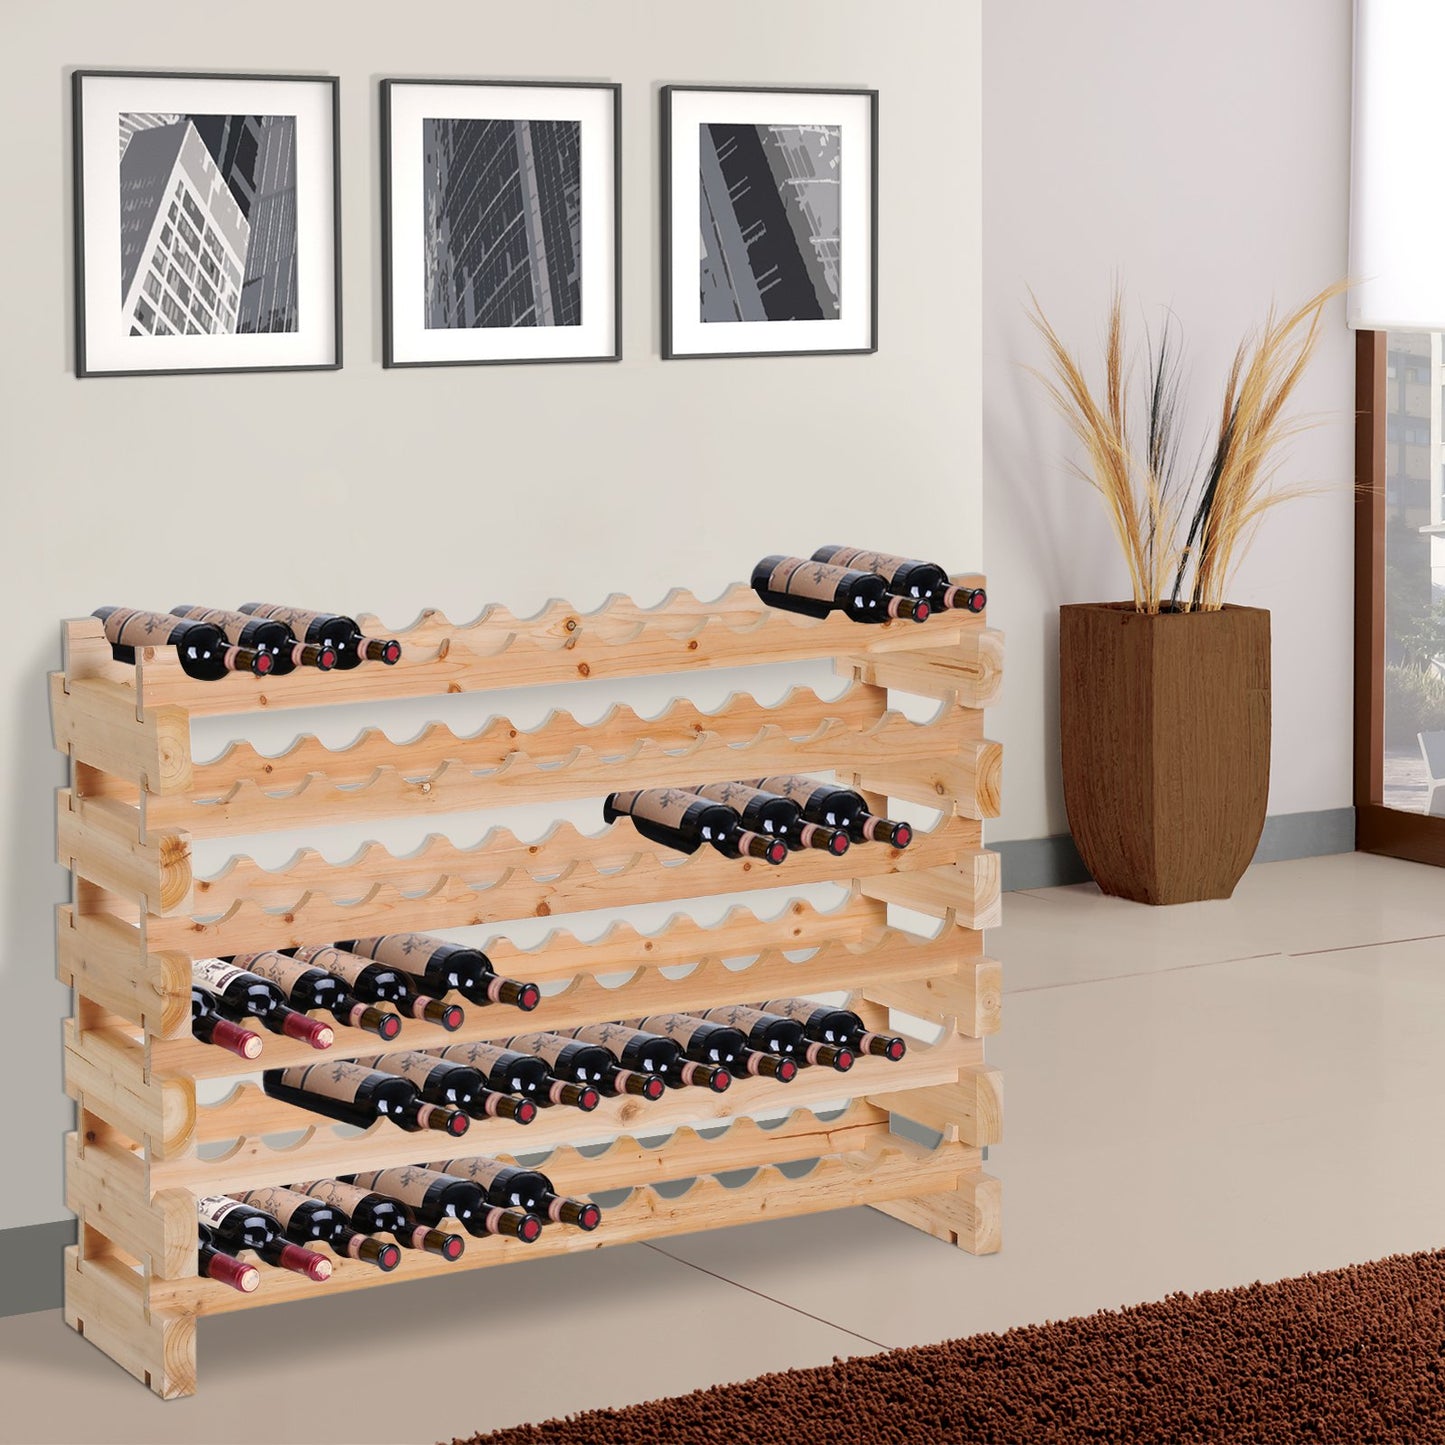 HOMCOM Stackable Wine Rack, Modular Storage Shelves, 72-Bottle Holder, Freestanding Display Rack for Kitchen